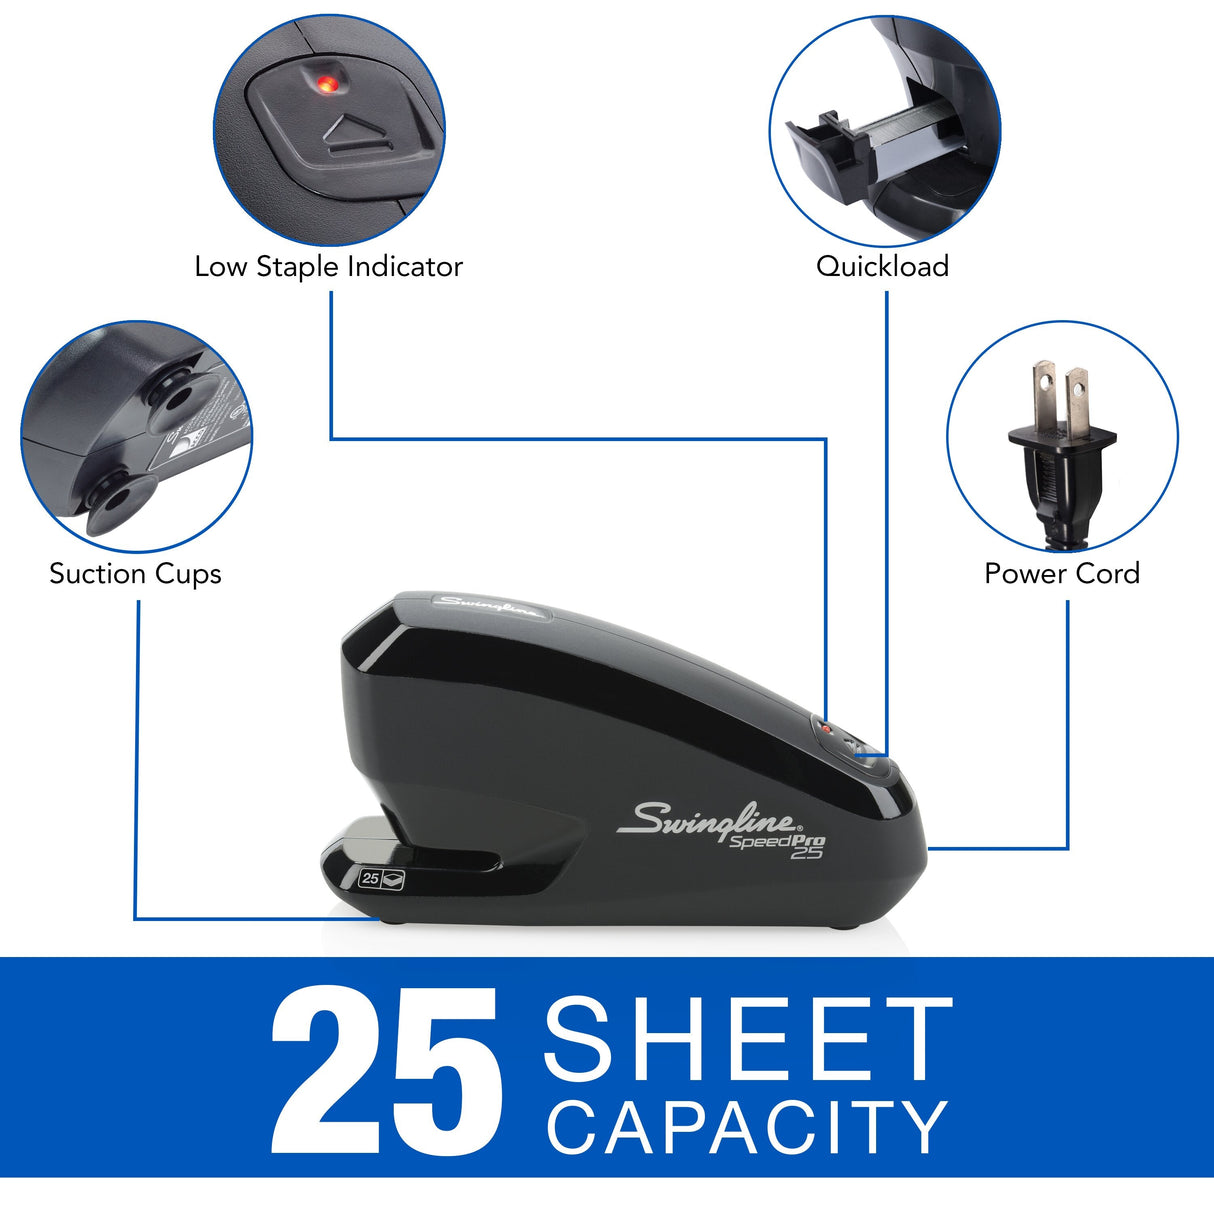 Swingline Speed Pro 25 Electric Stapler Value Pack - 25 Sheet Capacity